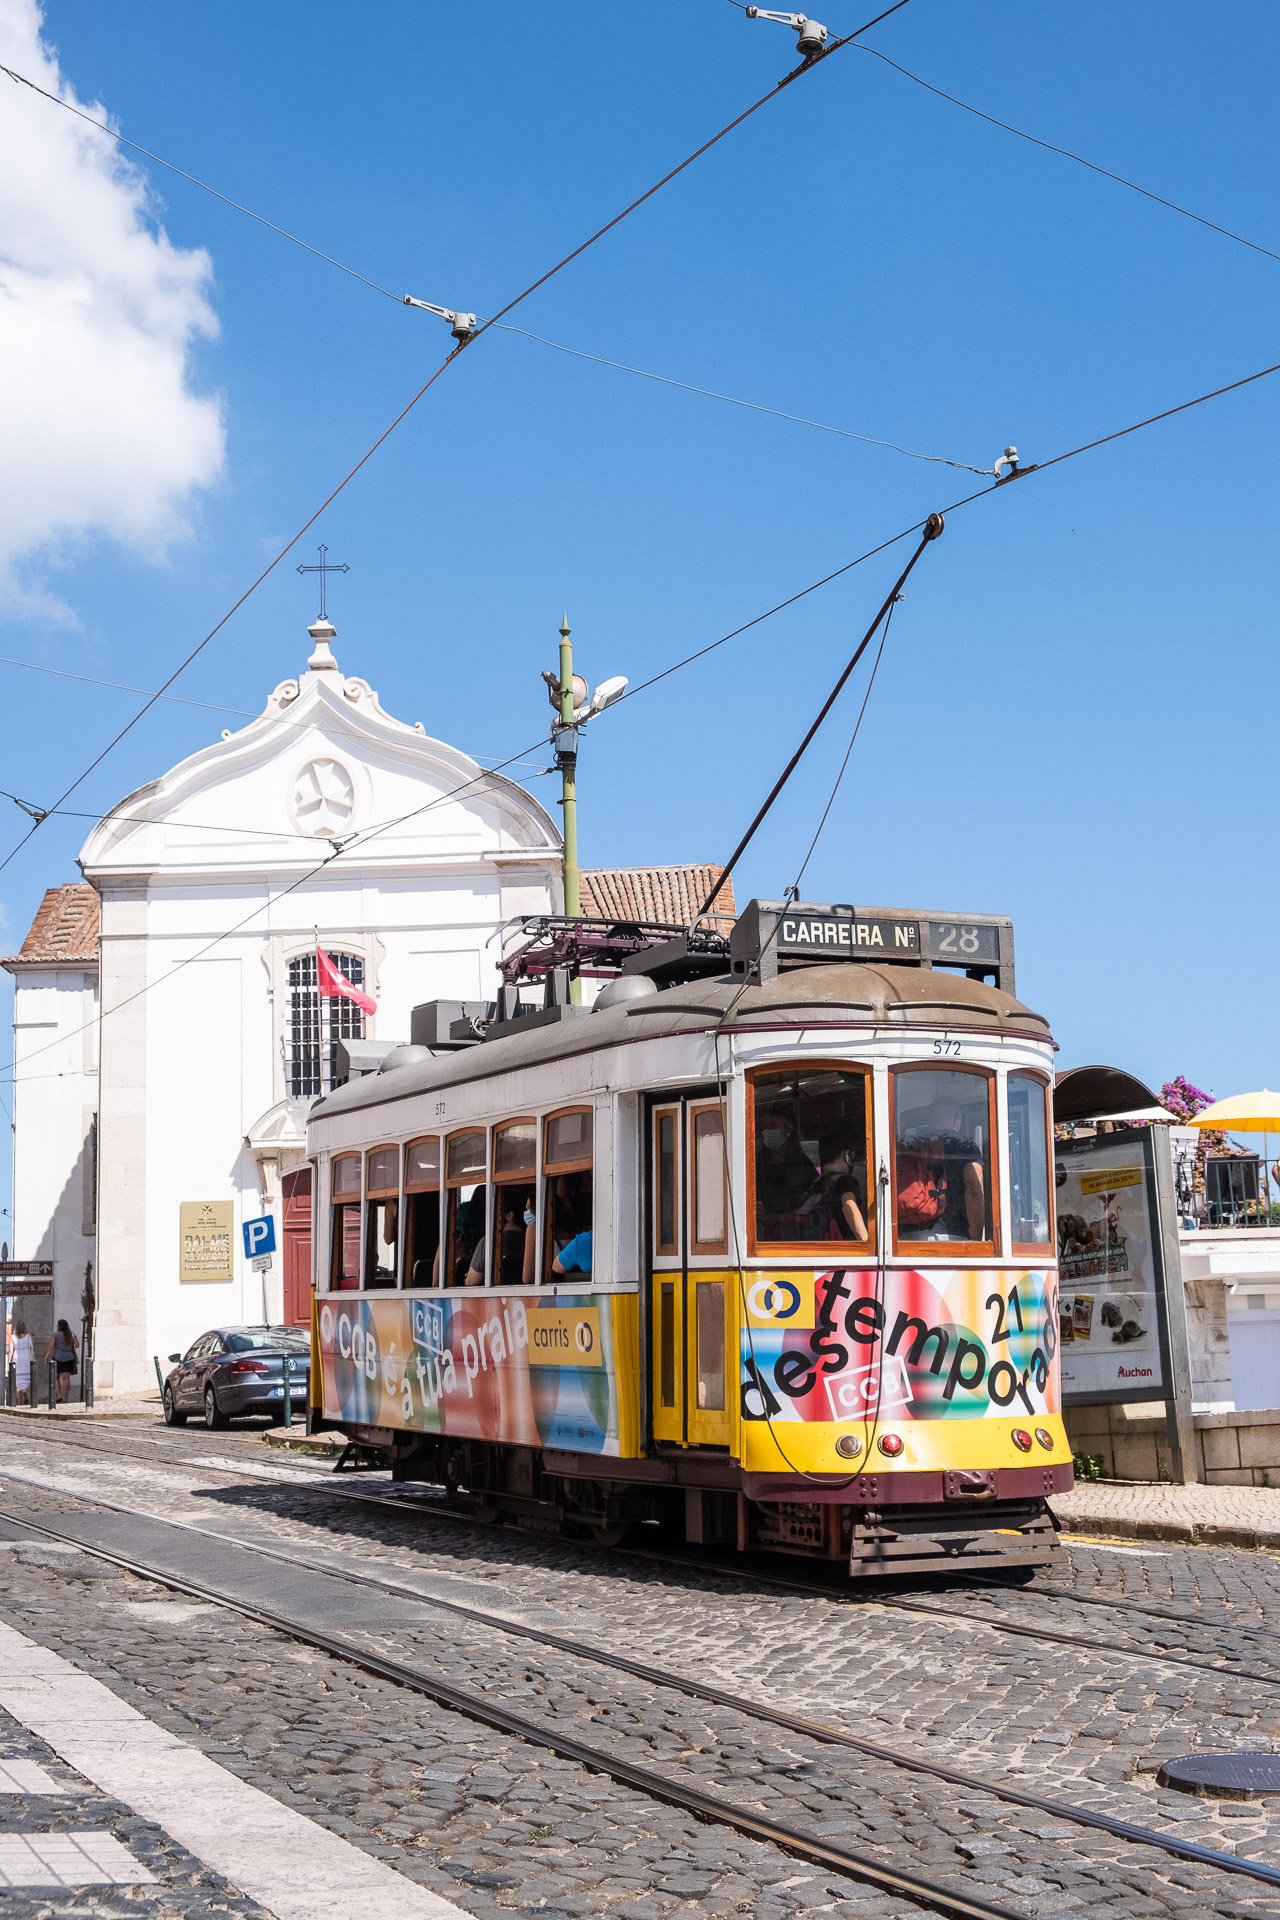 tram no 28 passing a church in Lisbon 